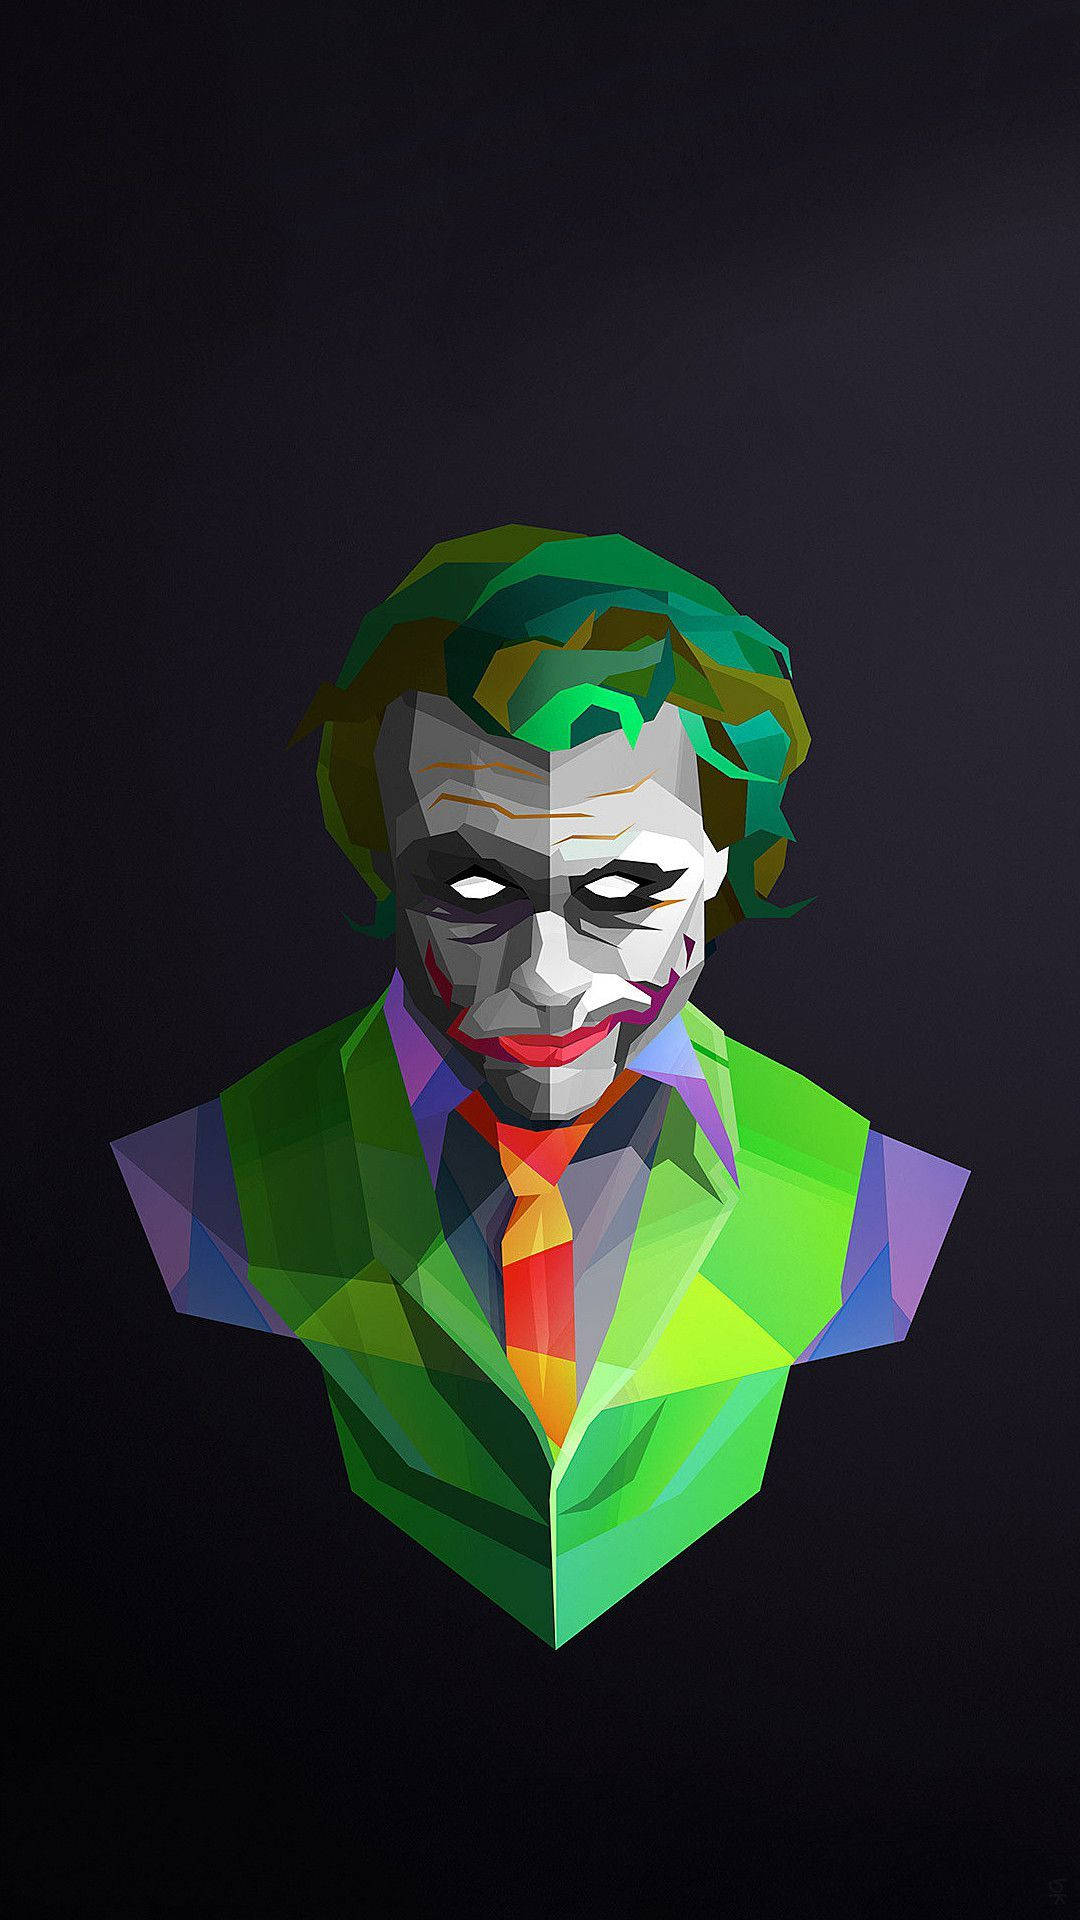 Geometric Heath Ledger Joker